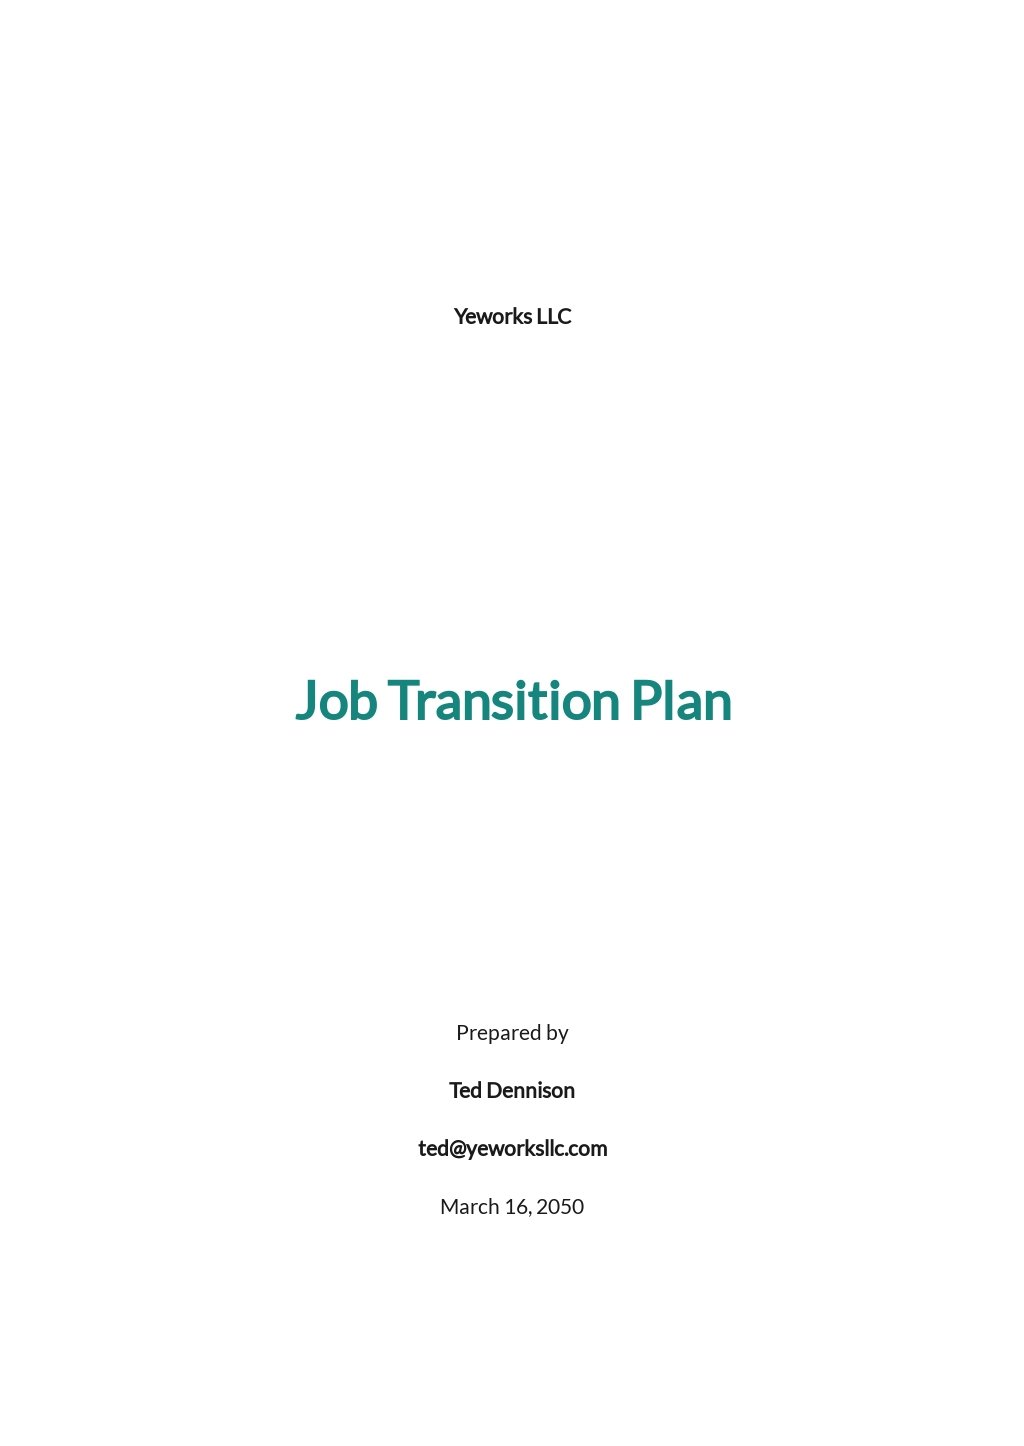 Job Transition Plan Template.jpe